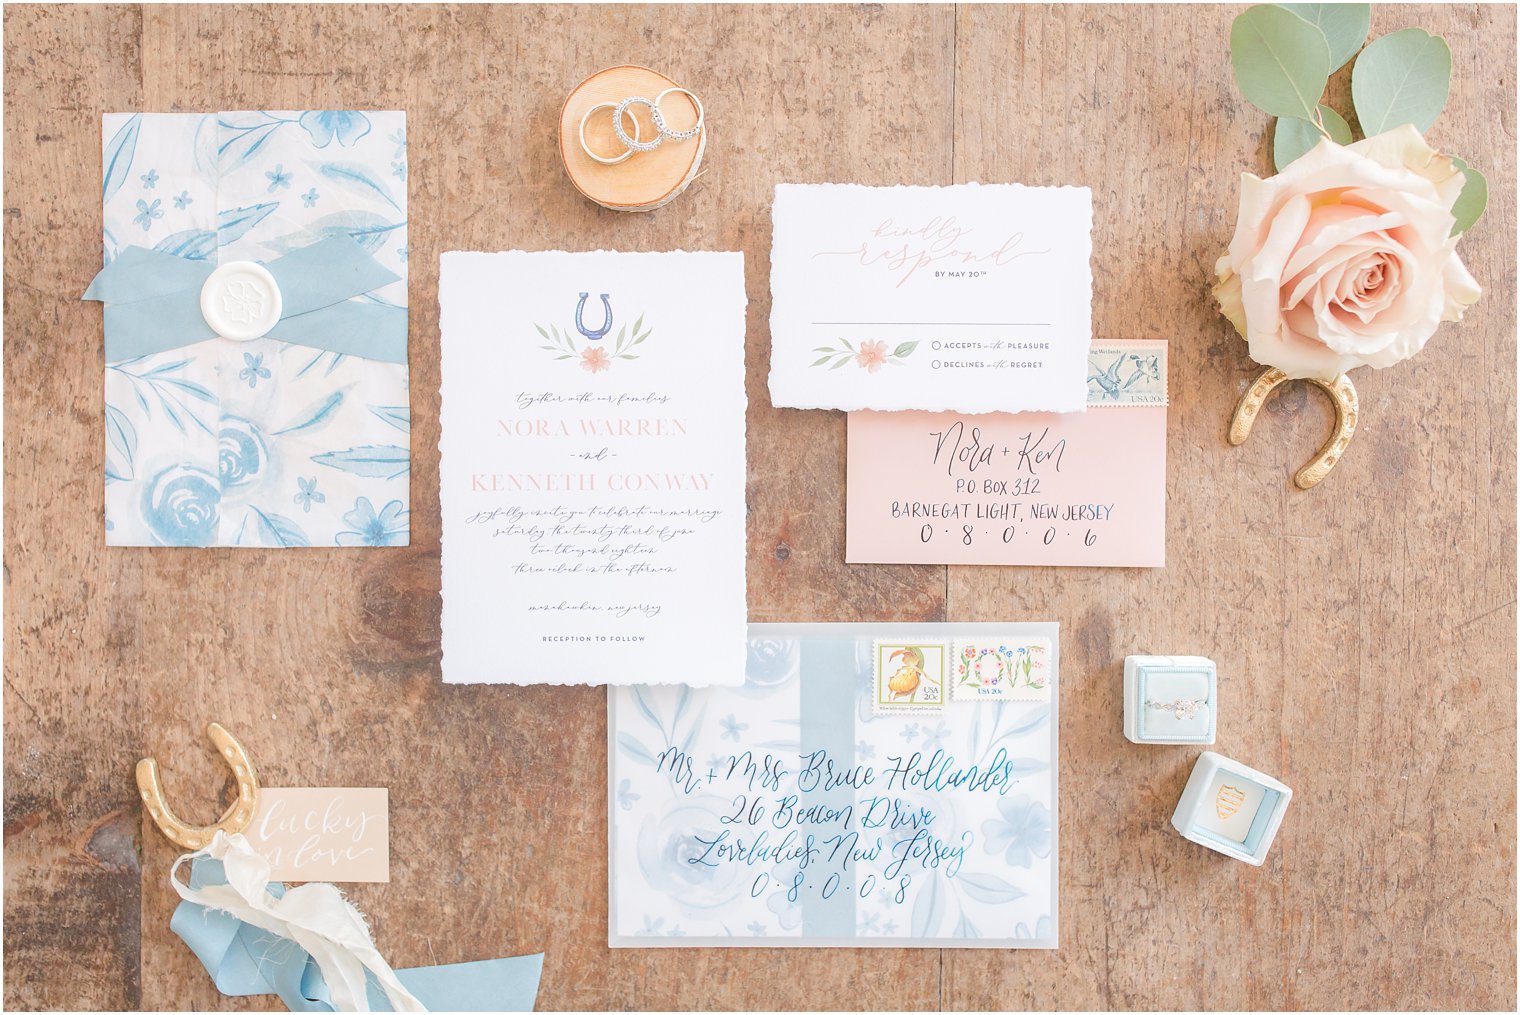 Wedding invitation by Crisp by Britt